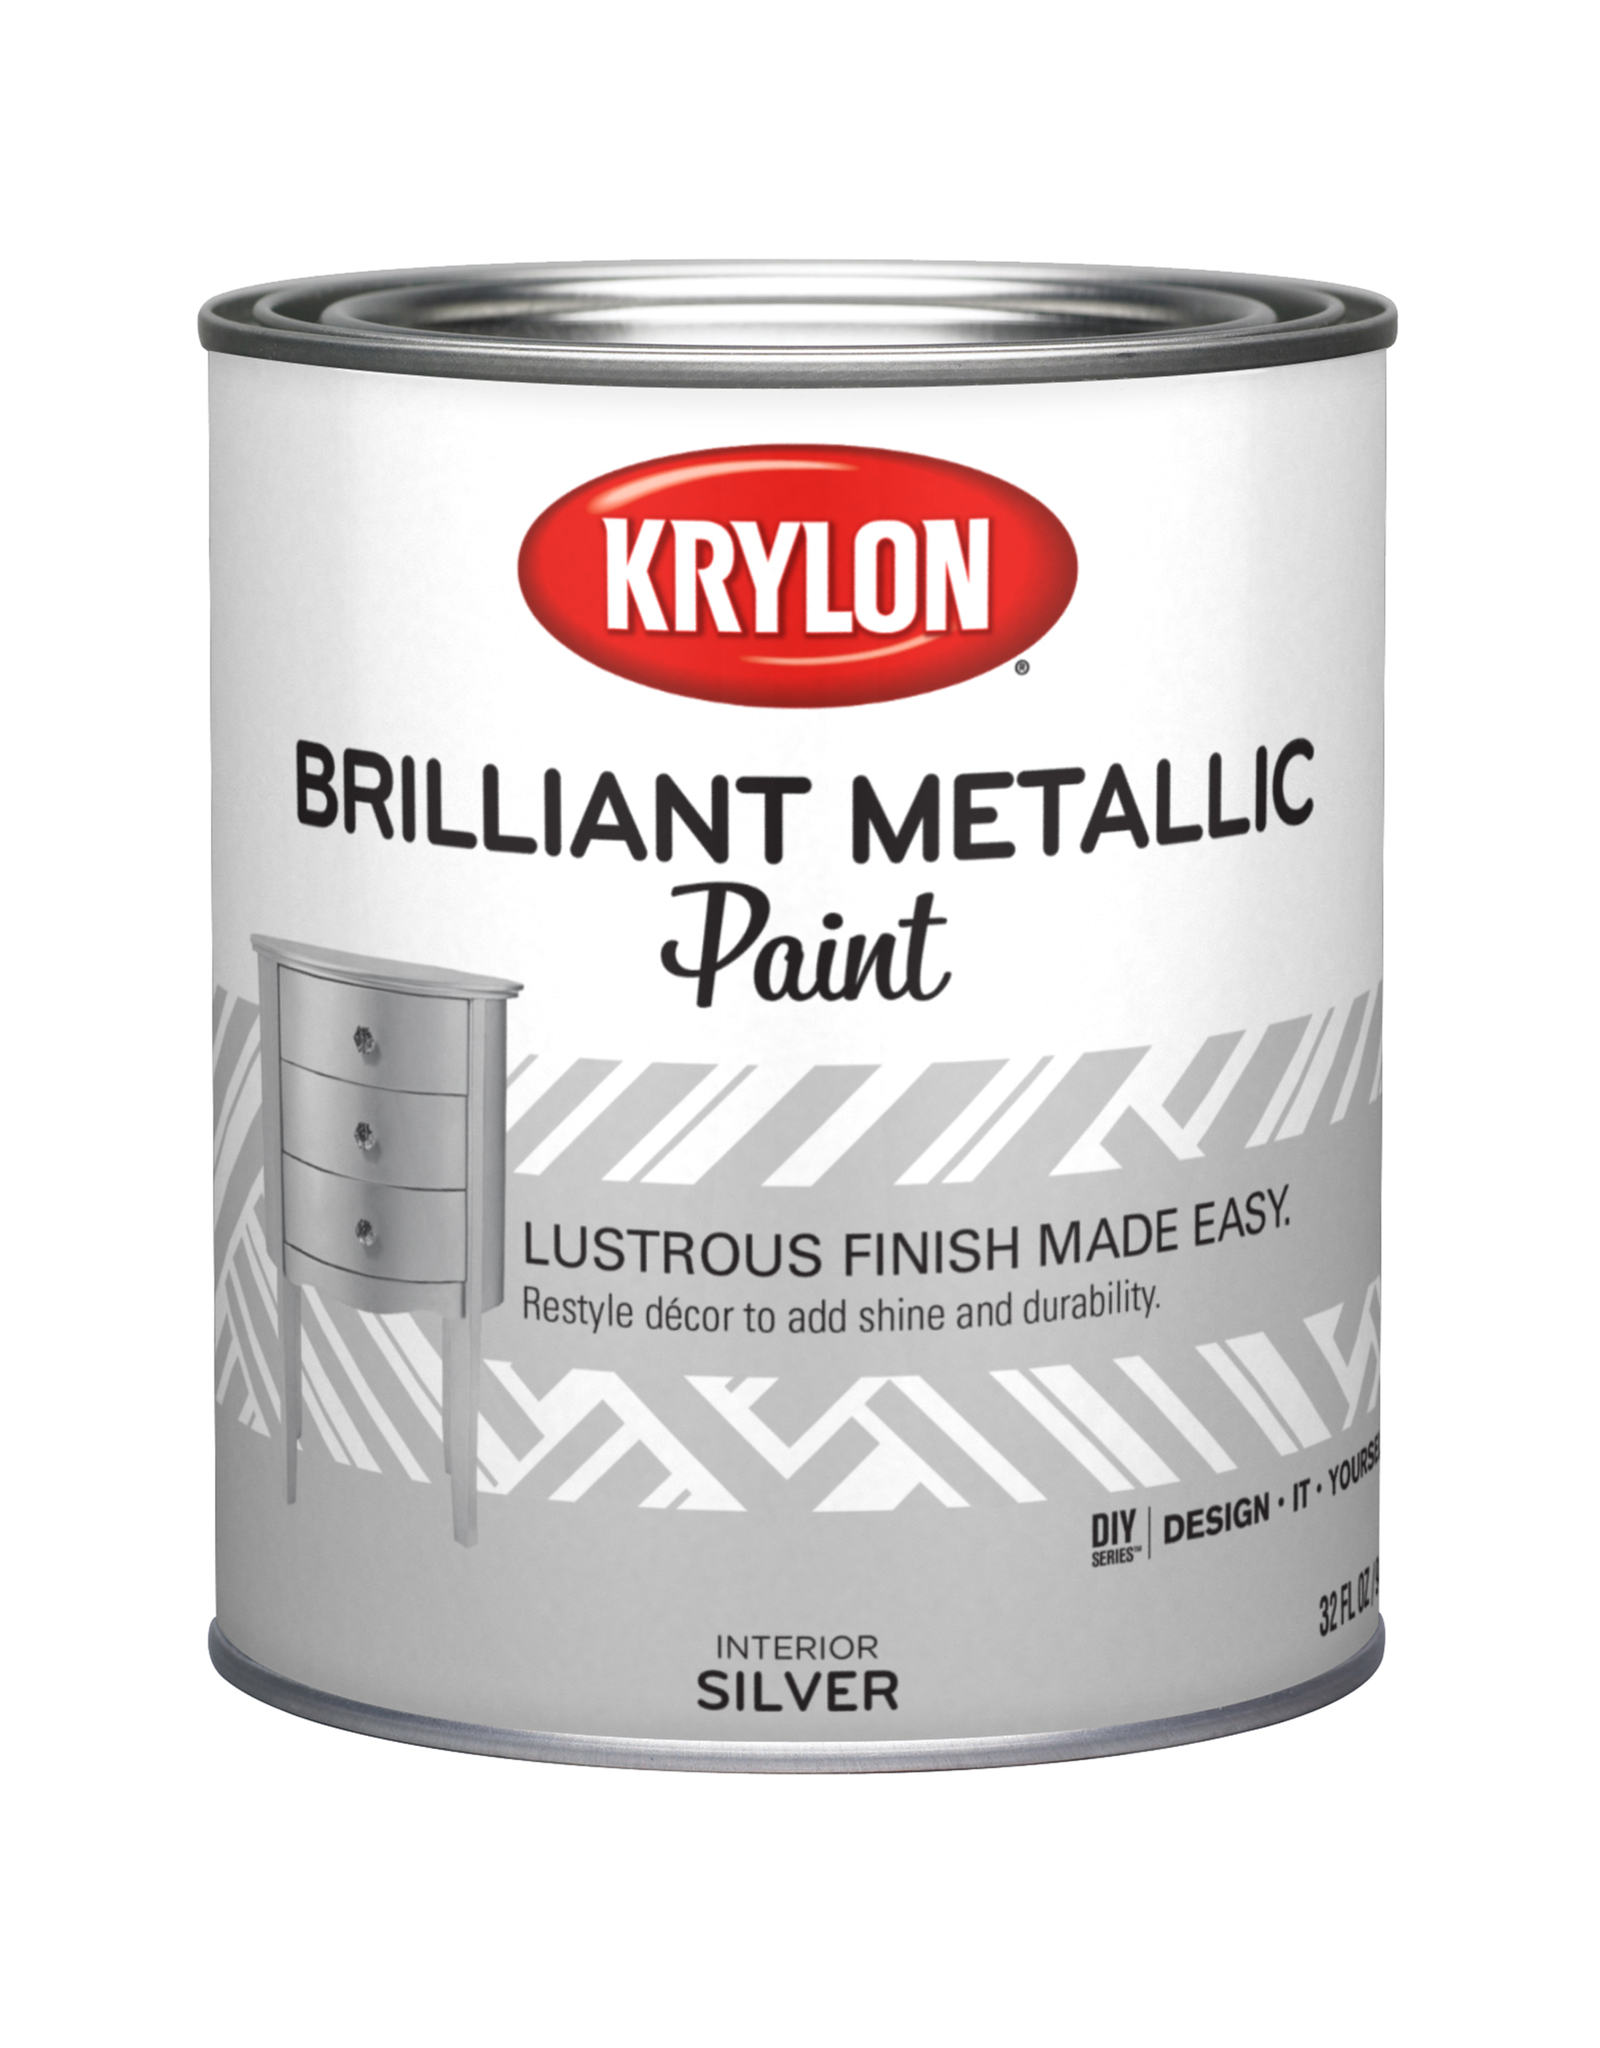 Krylon Art Supplies for sale